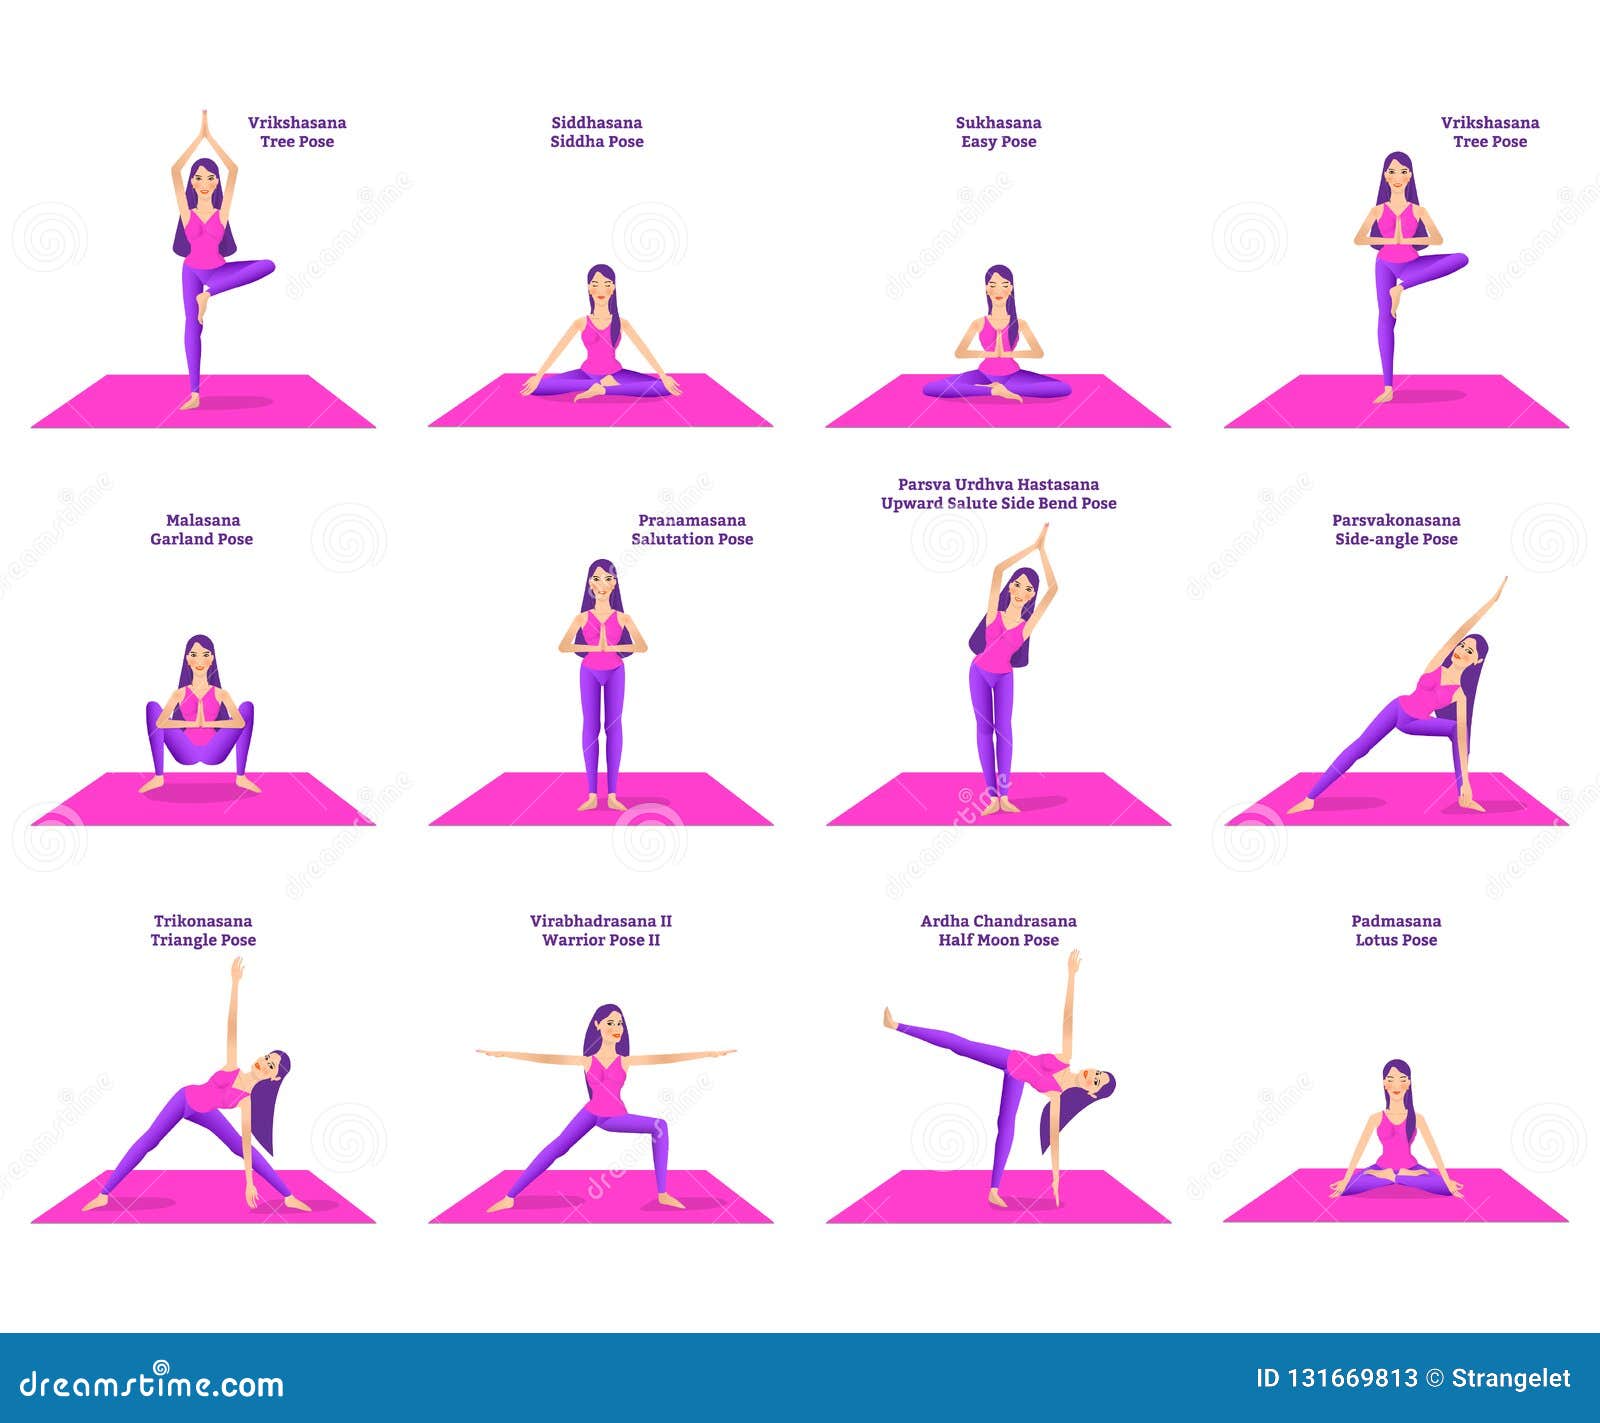 names of different yoga asanas #yogaphotography | Yoga poses advanced,  Advanced yoga, Yoga poses pictures